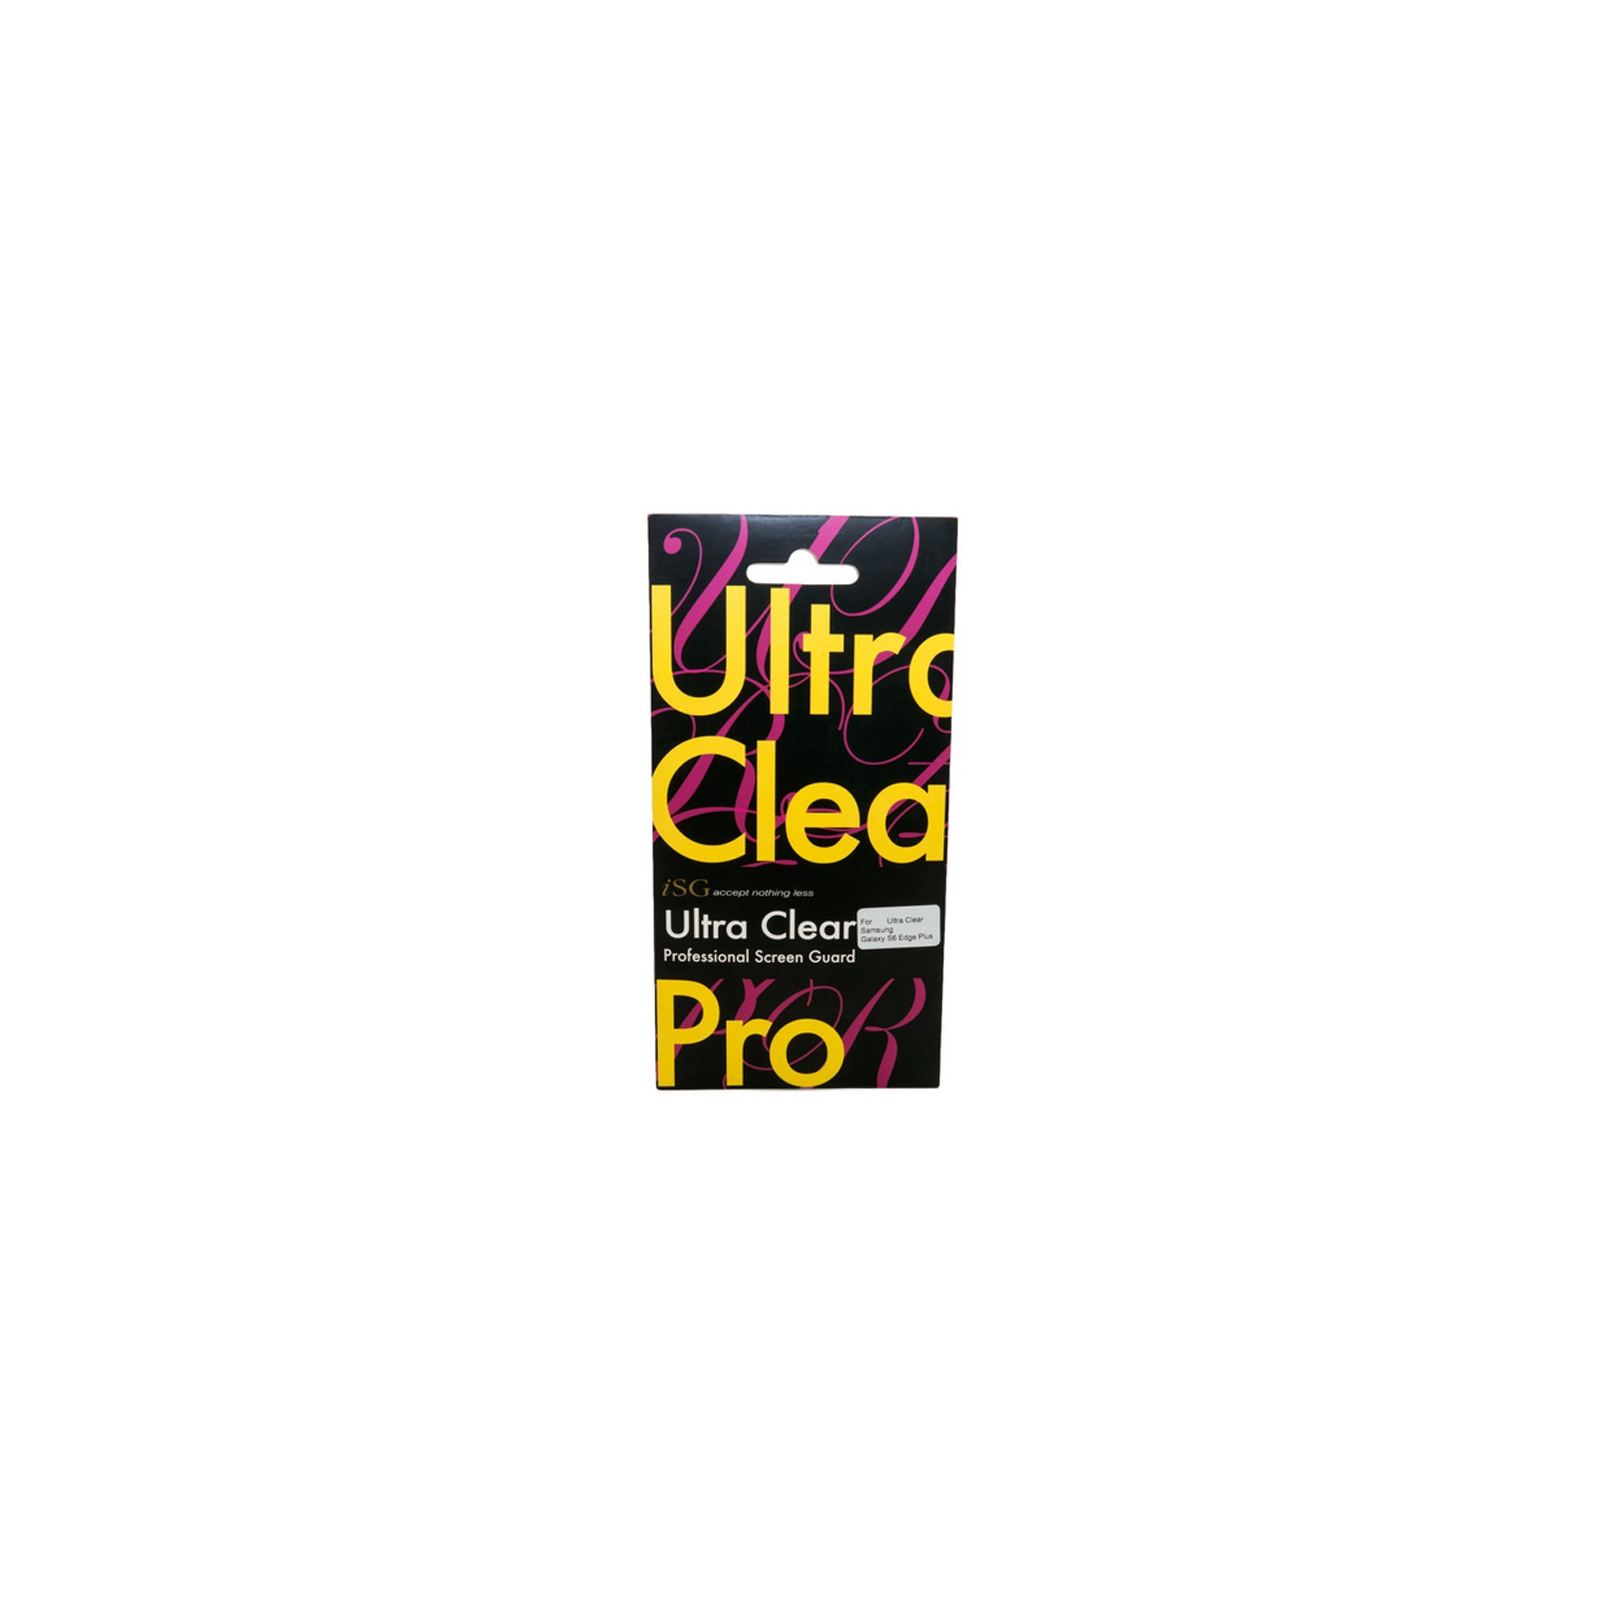 Пленка защитная iSG Ultra Clear Pro для Samsung Galaxy S6 Edge plus (SPF4252) изображение 2